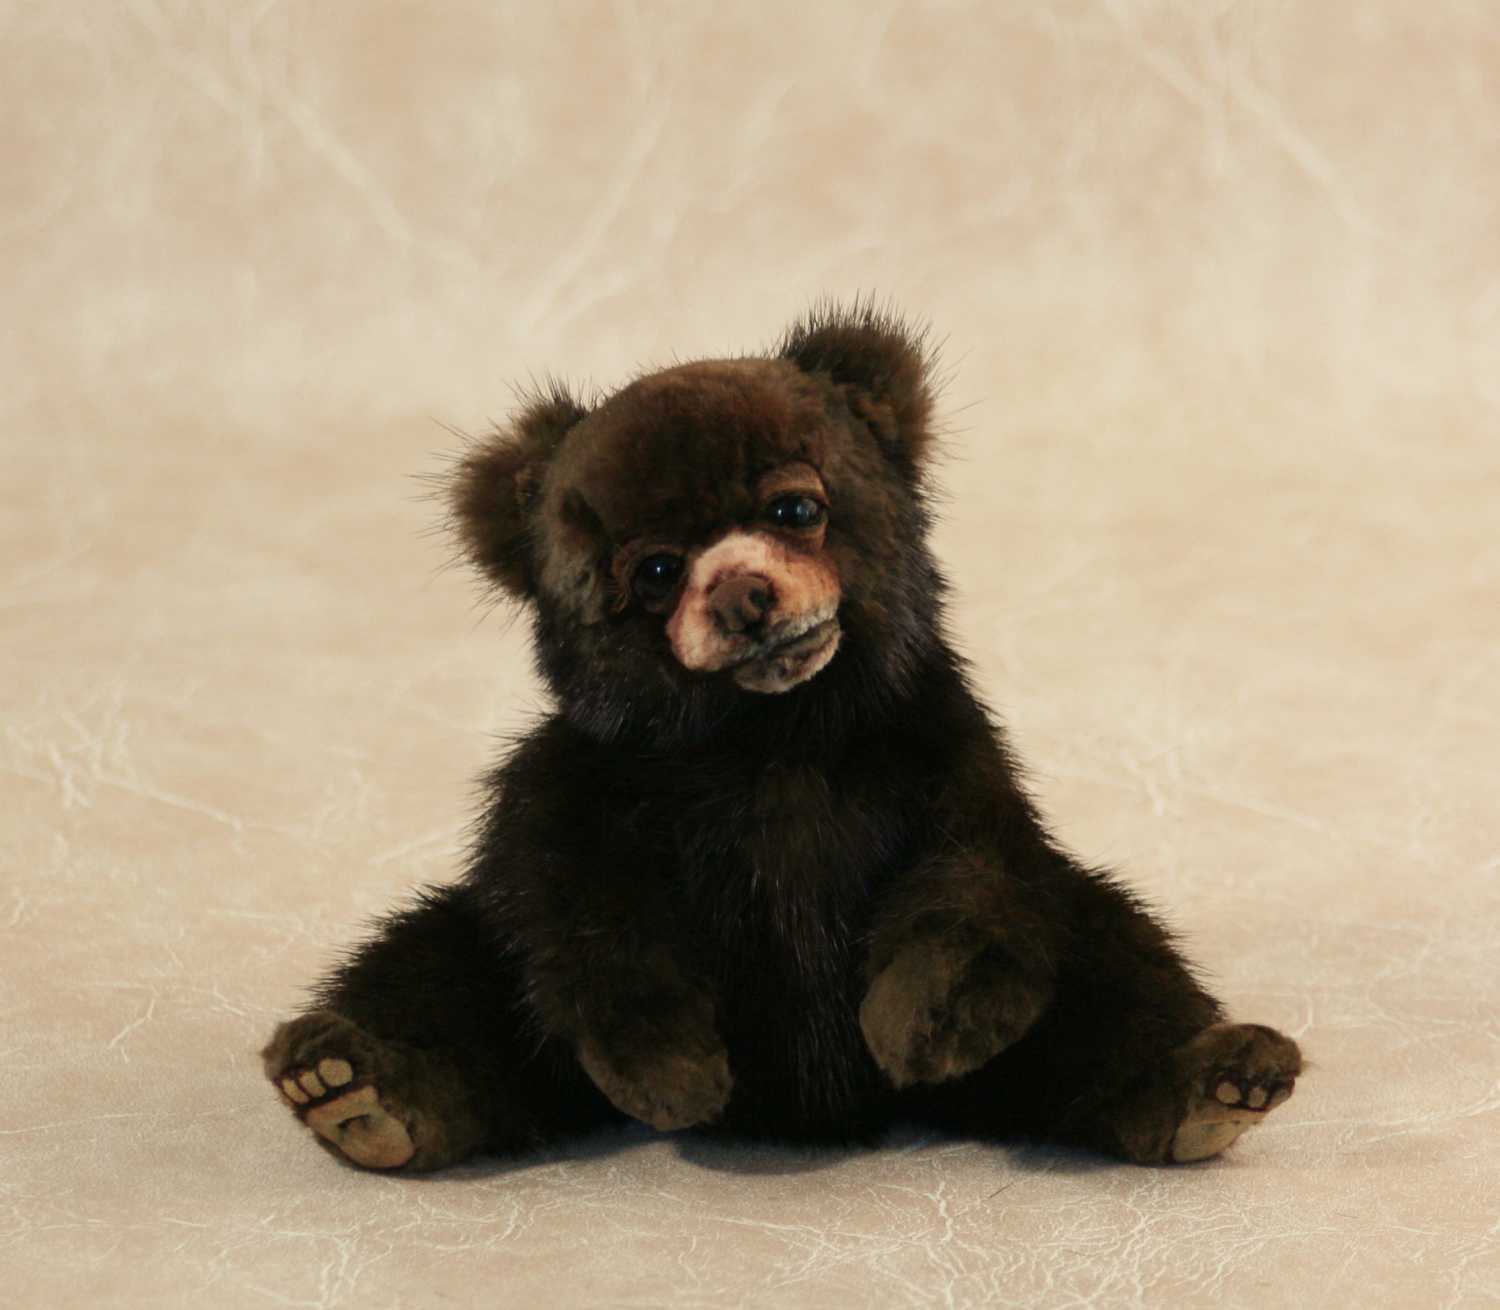 New England Bears, Inc. Baby Bears for Sale Purchase Live Baby Bear